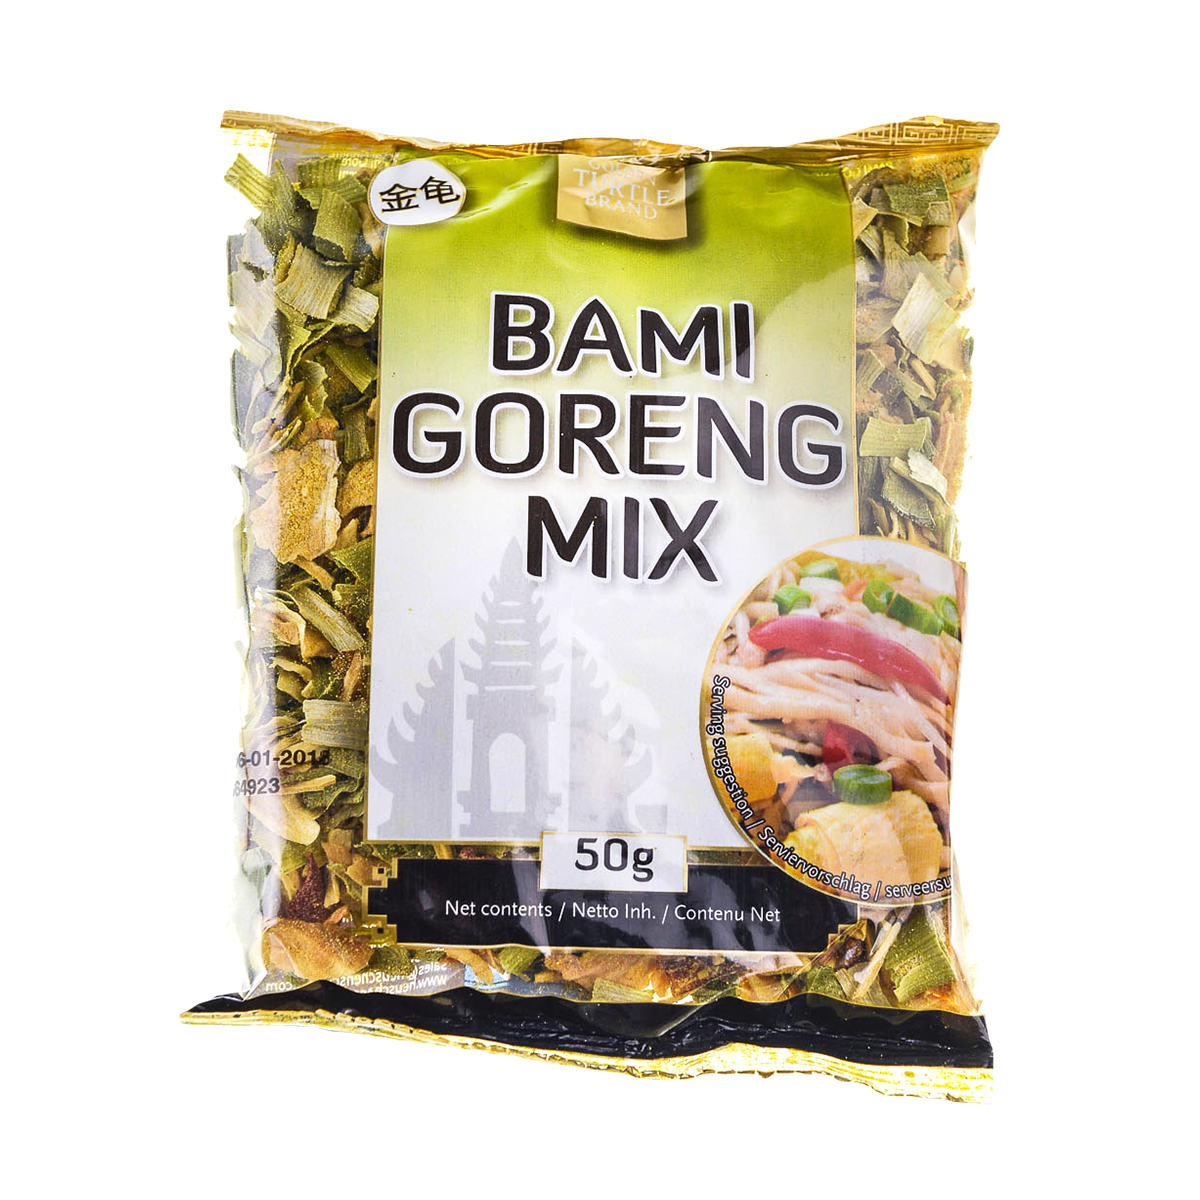 Mix de condimente - Mix Bami Goreng GT 50g, asianfood.ro